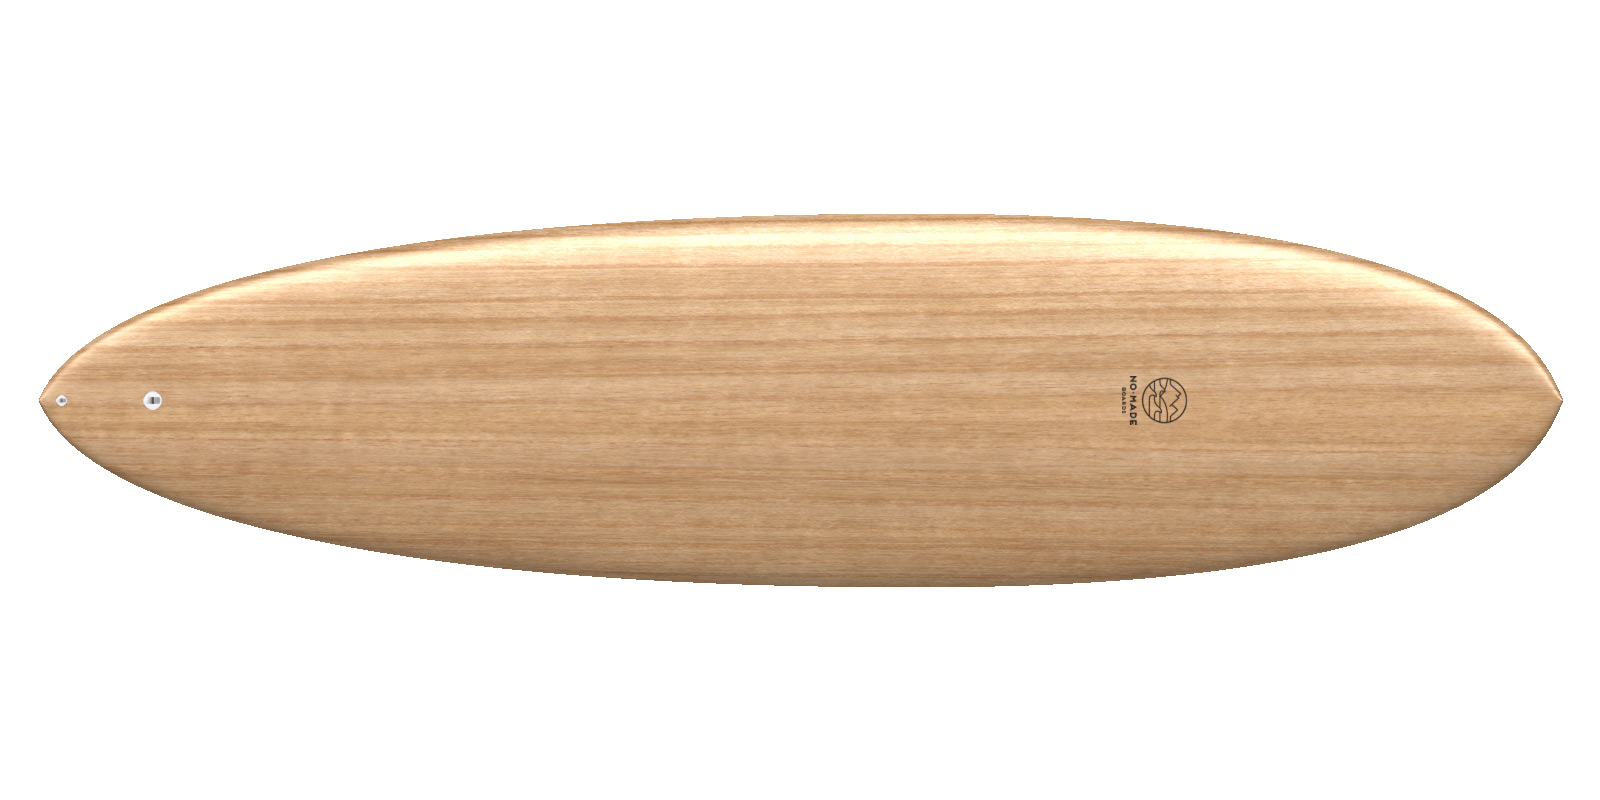 wooden surfboard